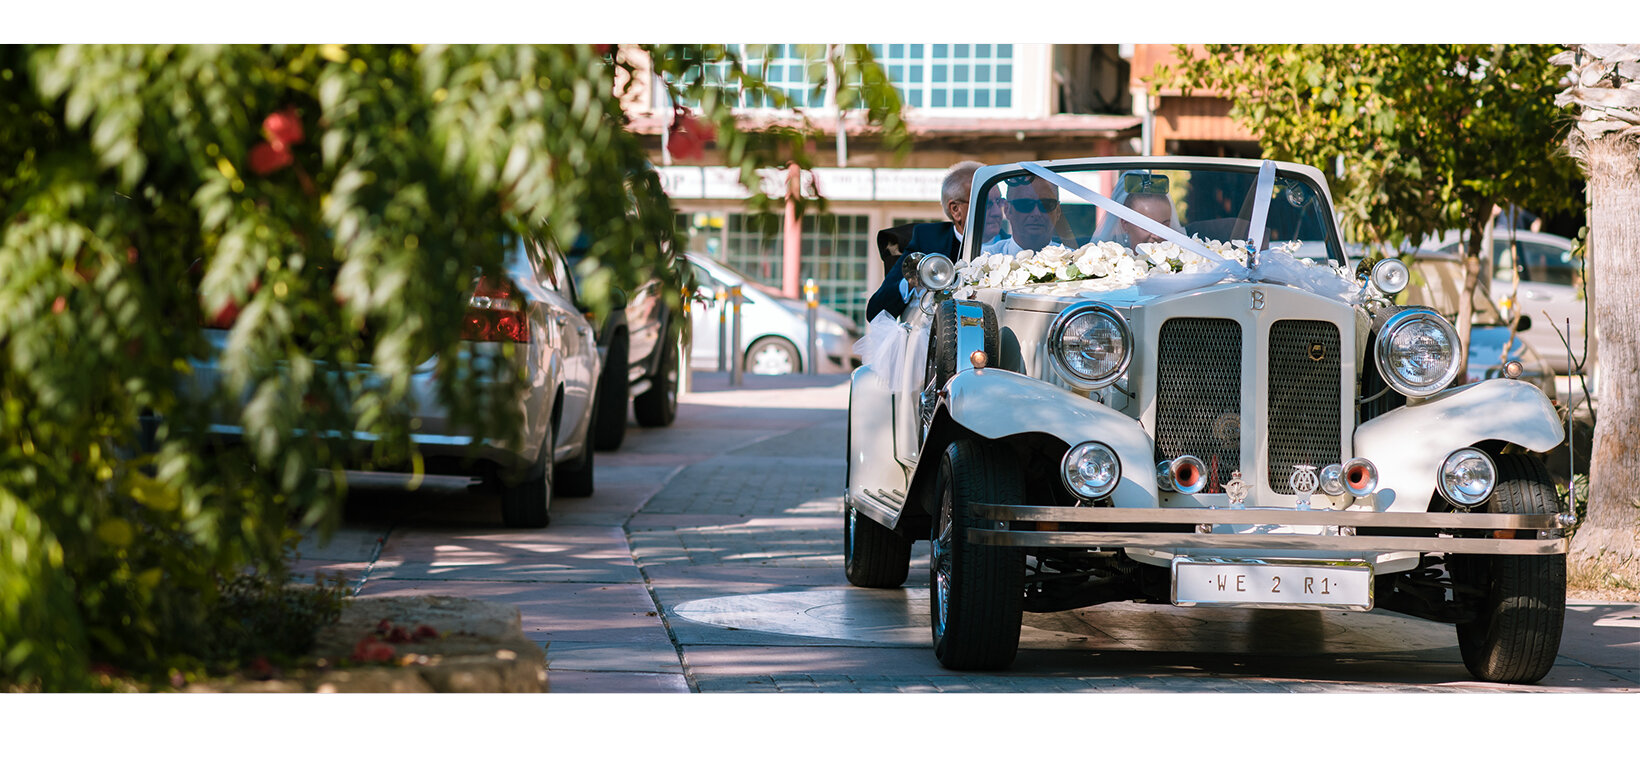 Best of Cyprus Weddings - Wedding Transport Limousine